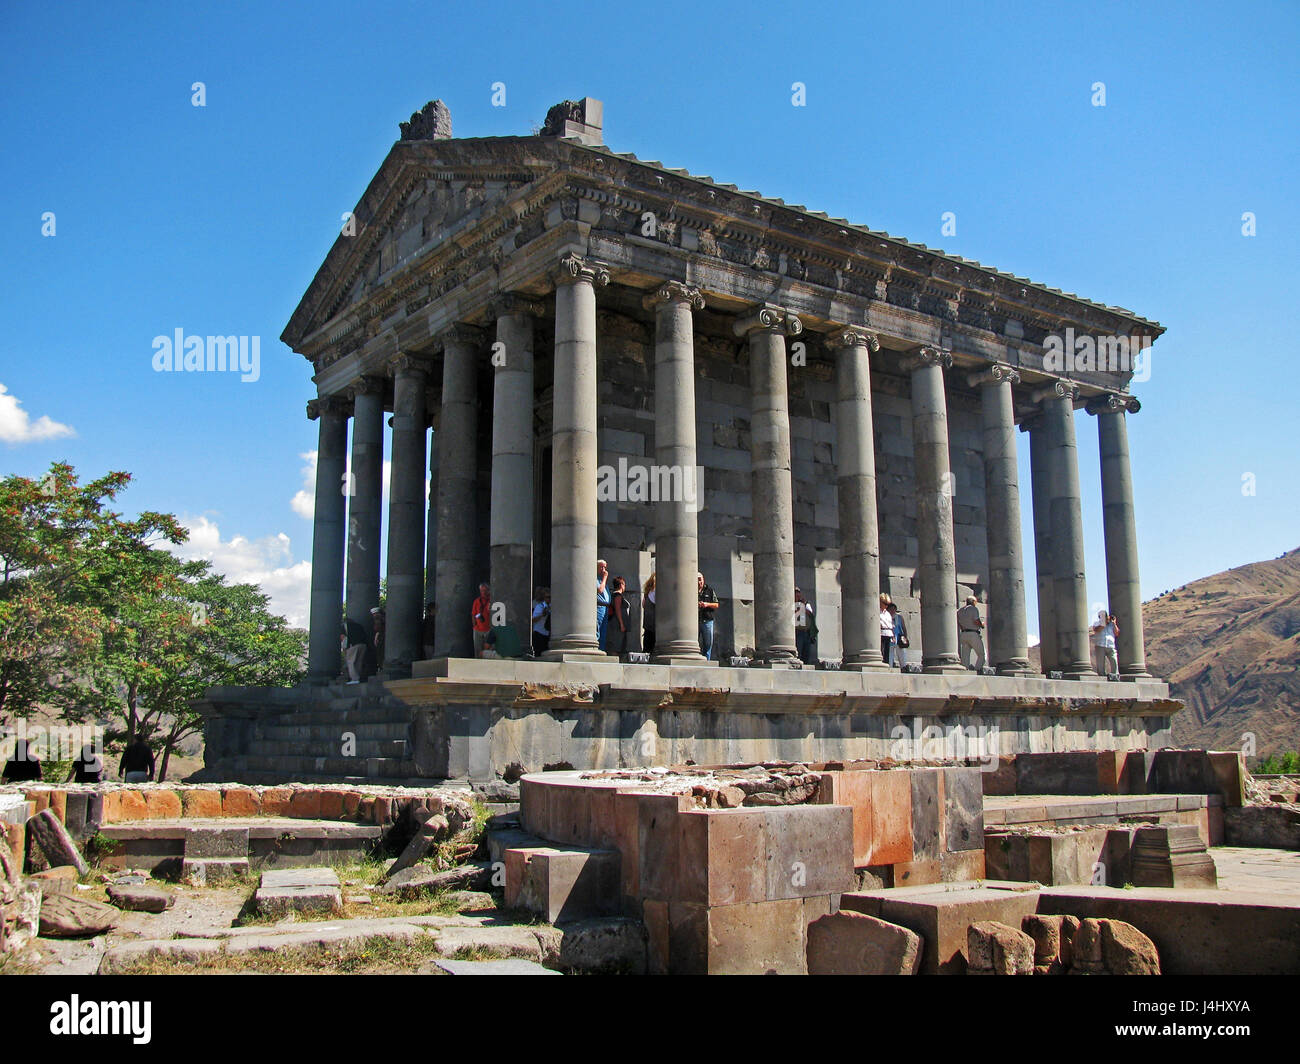 Garni, Armenia: Circa September 2012 - The pagan temple of Garni, dedicated to Mithra, the deity of sun in pagan Armenia Stock Photo